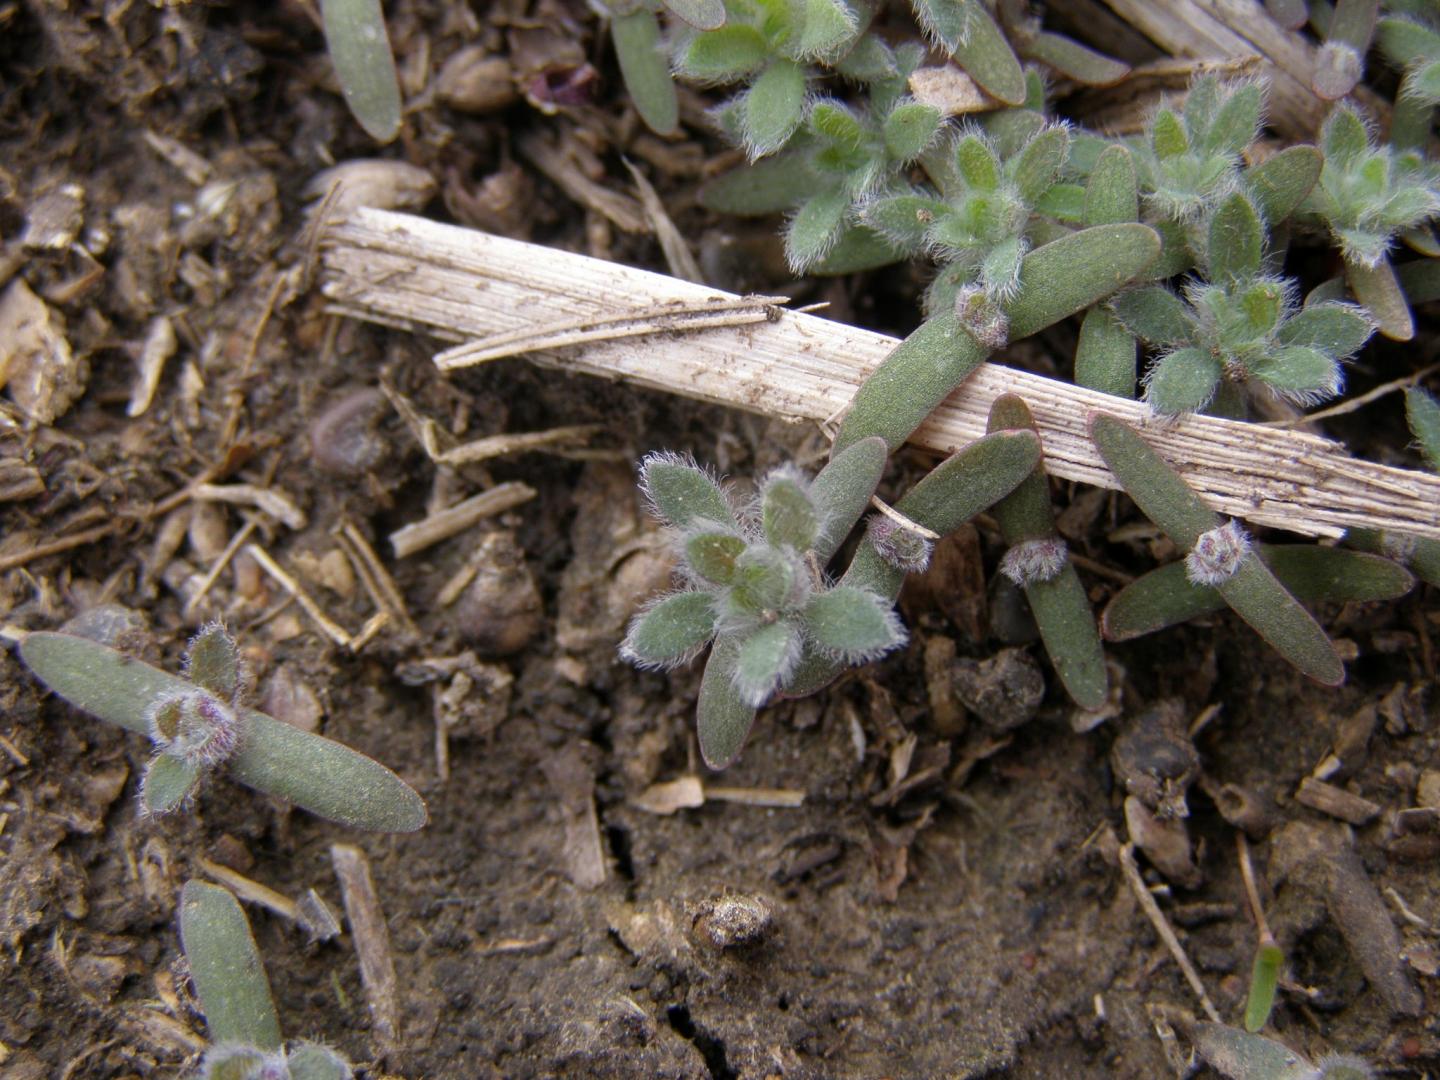 Kochia Seedlings Emerging in the Field at Garden City, Kansas in March